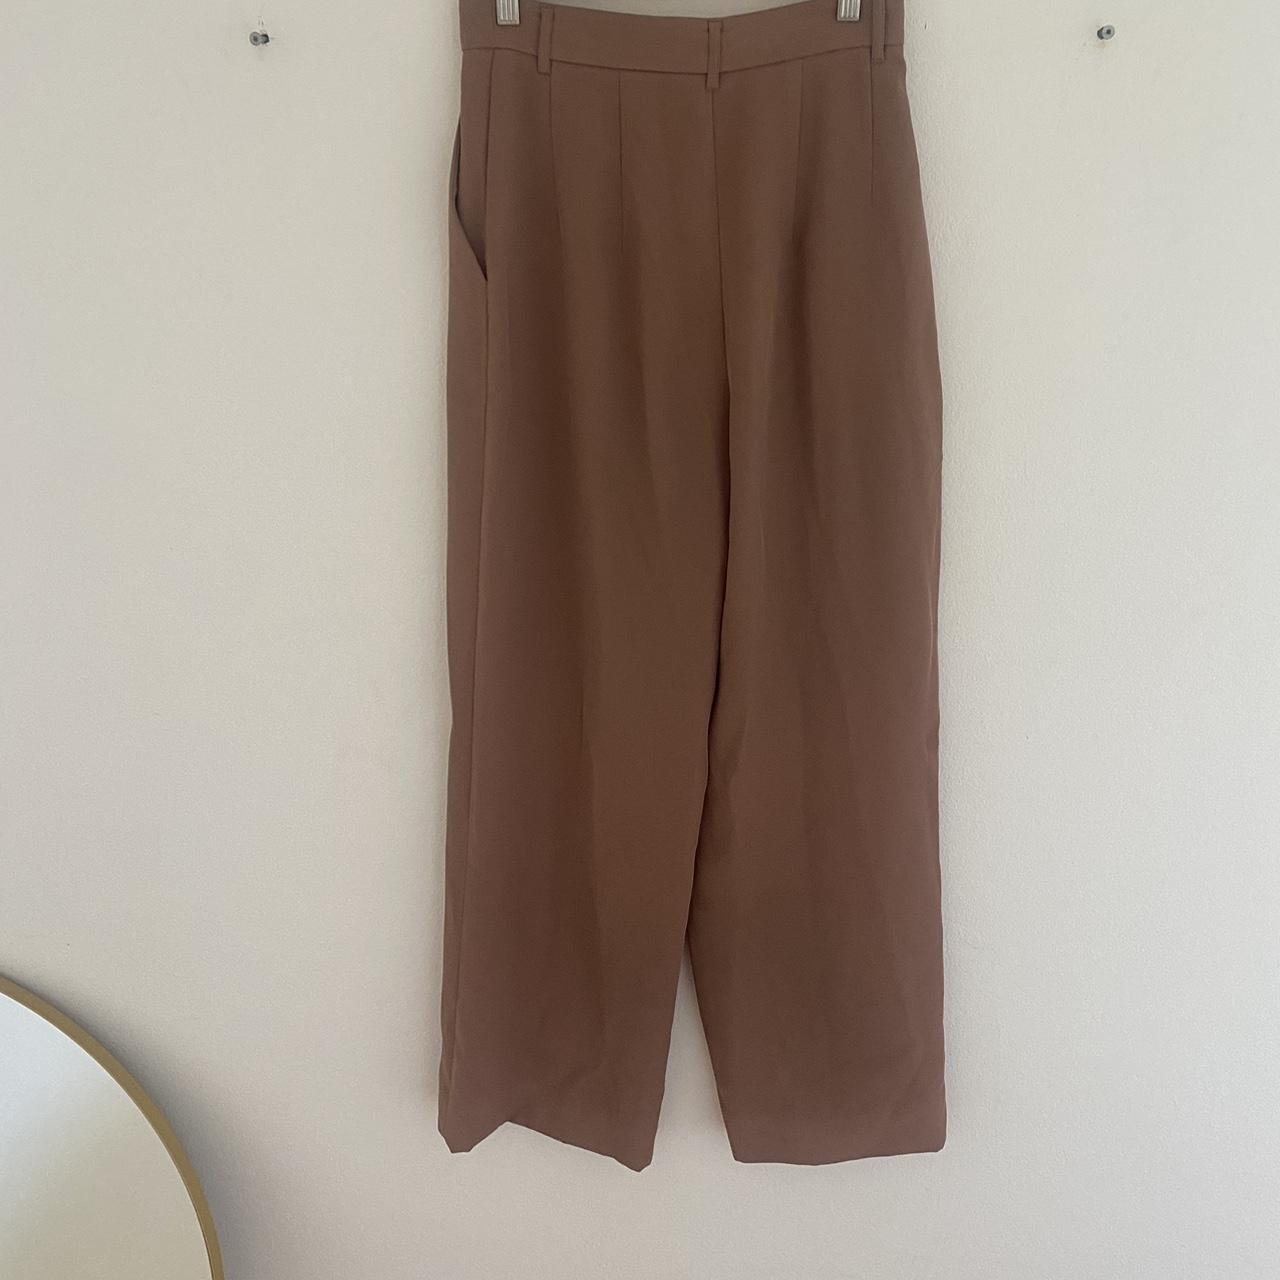 Kookai Tan Oyster Tailored Pants Size:... - Depop